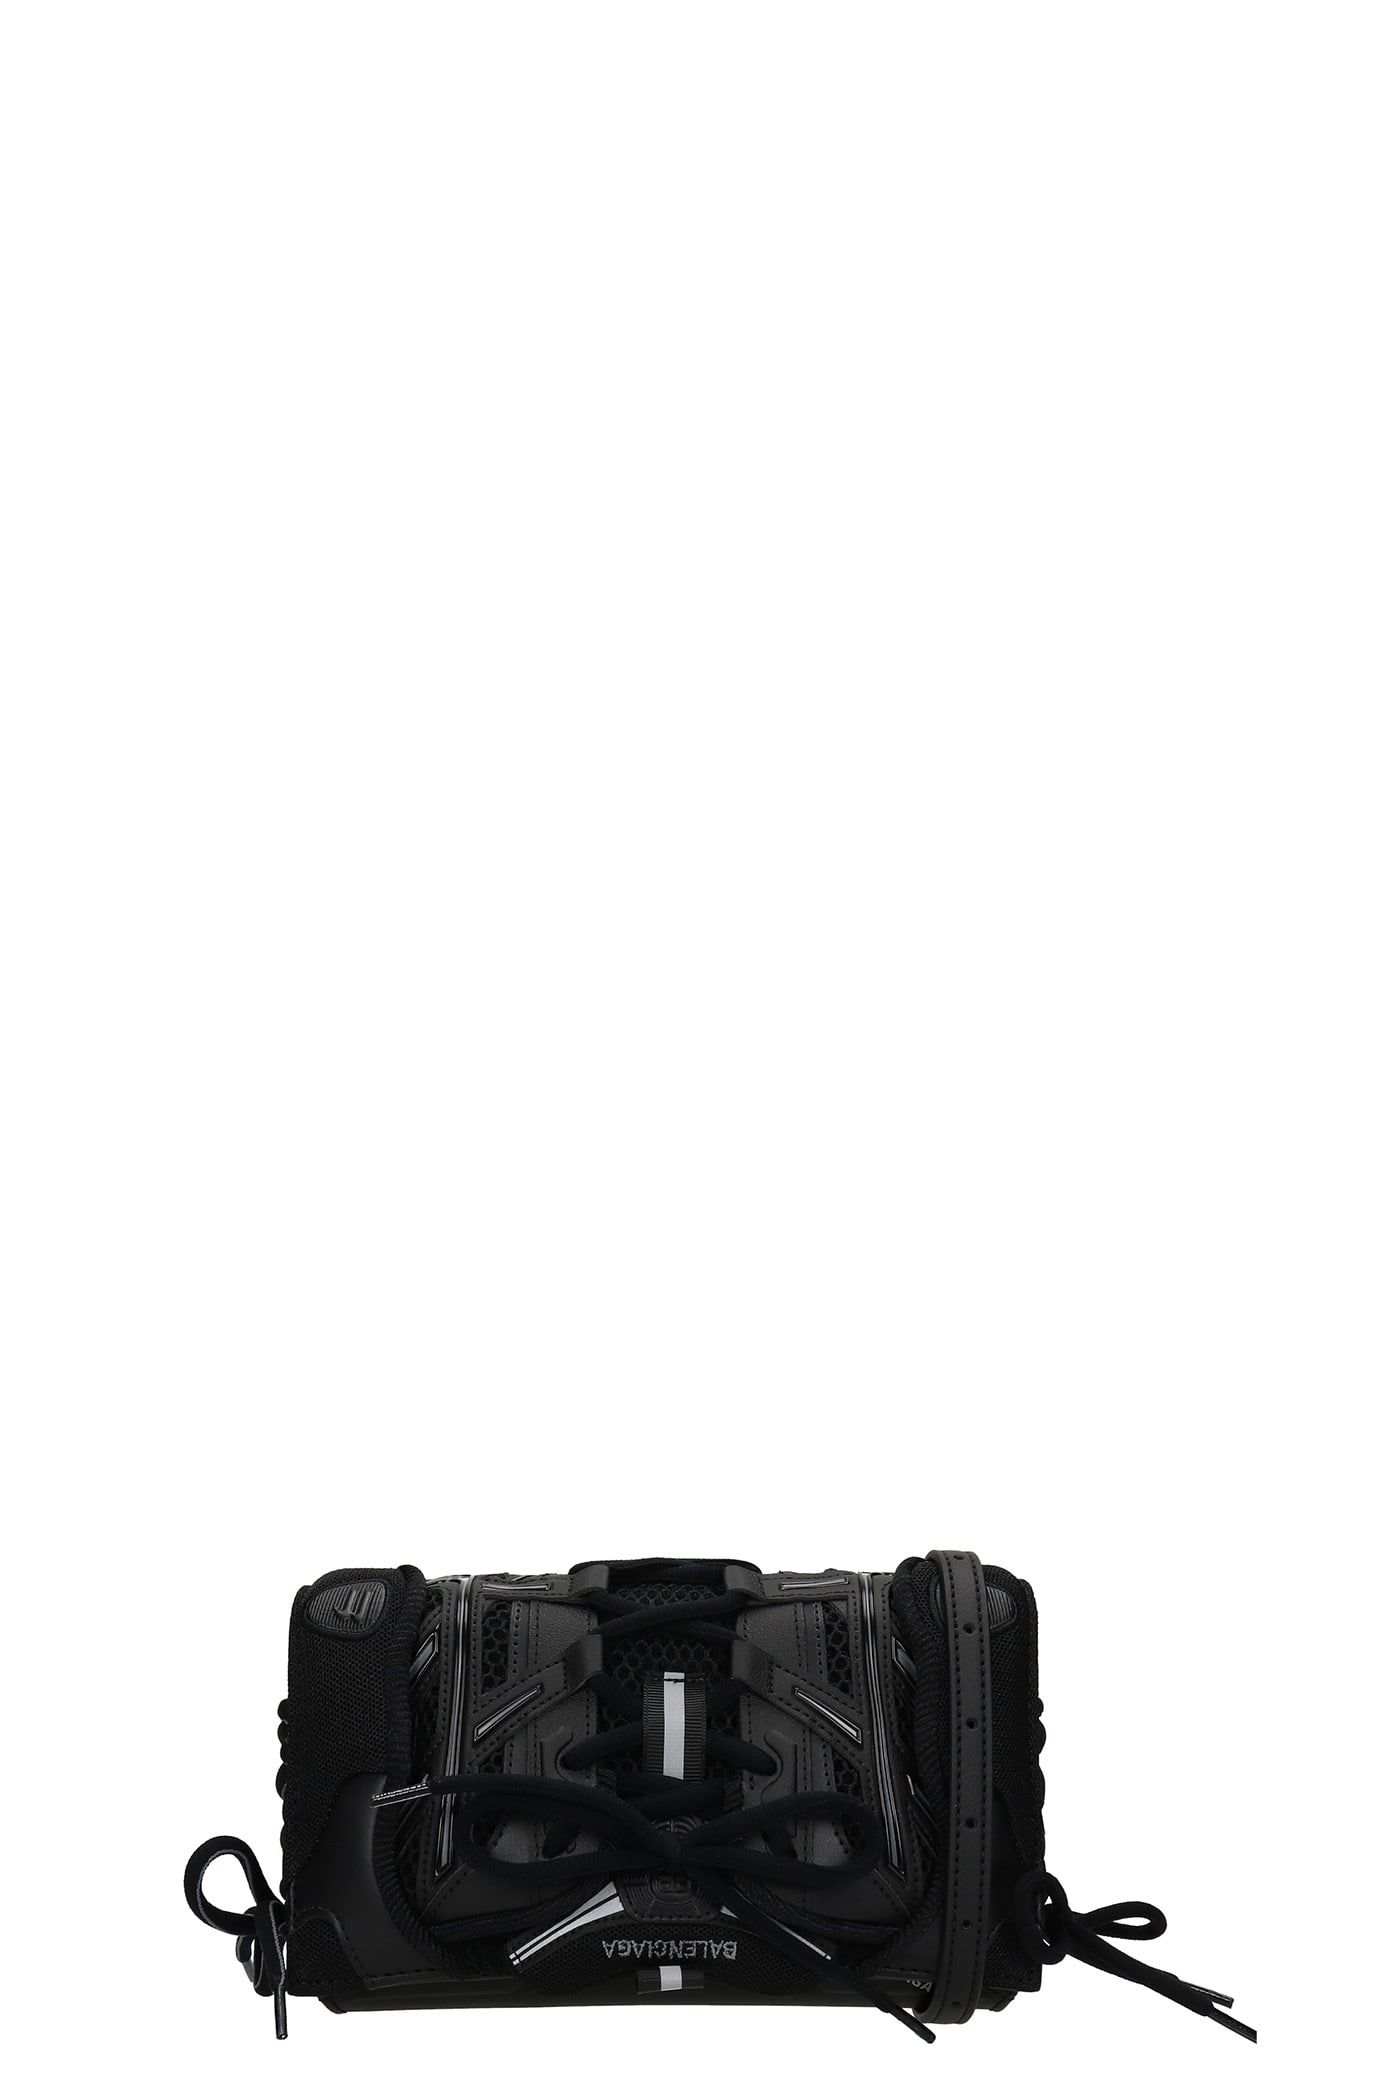 Balenciaga Shoulder Bag In Black Leather